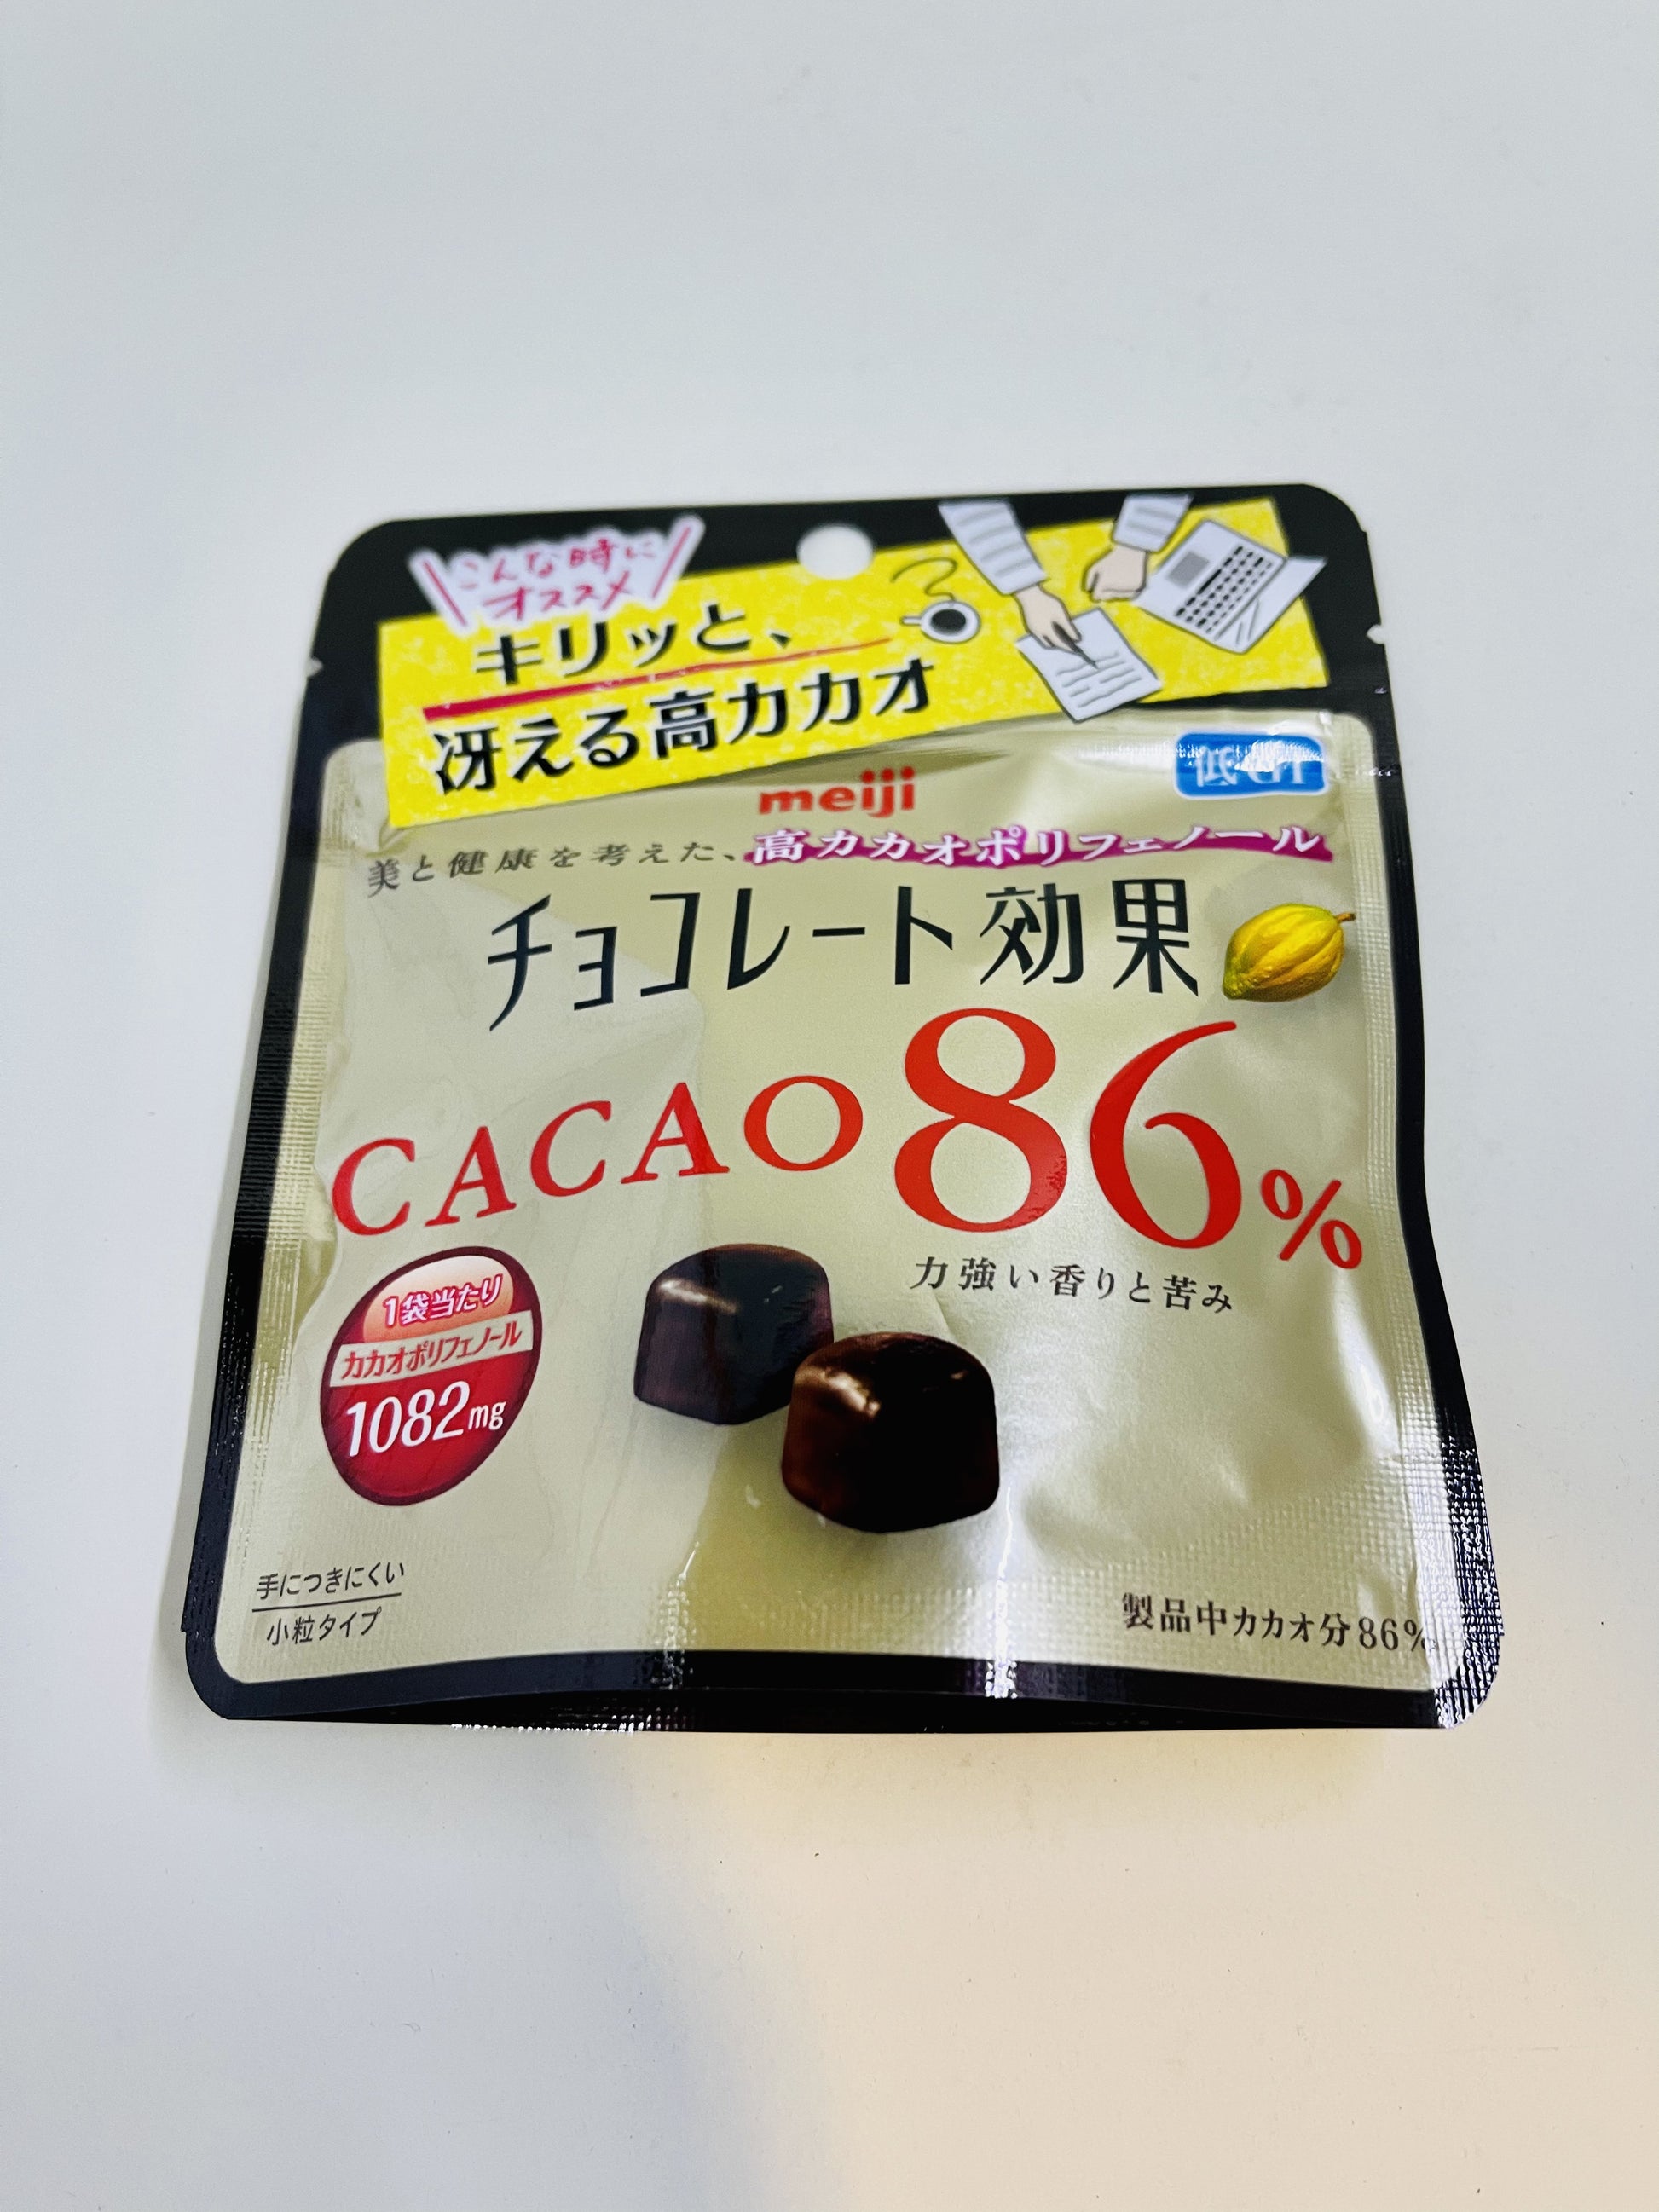 Meiji Yan Yan Cracker Stick With Dip - Chocolate Cream 2oz - Just